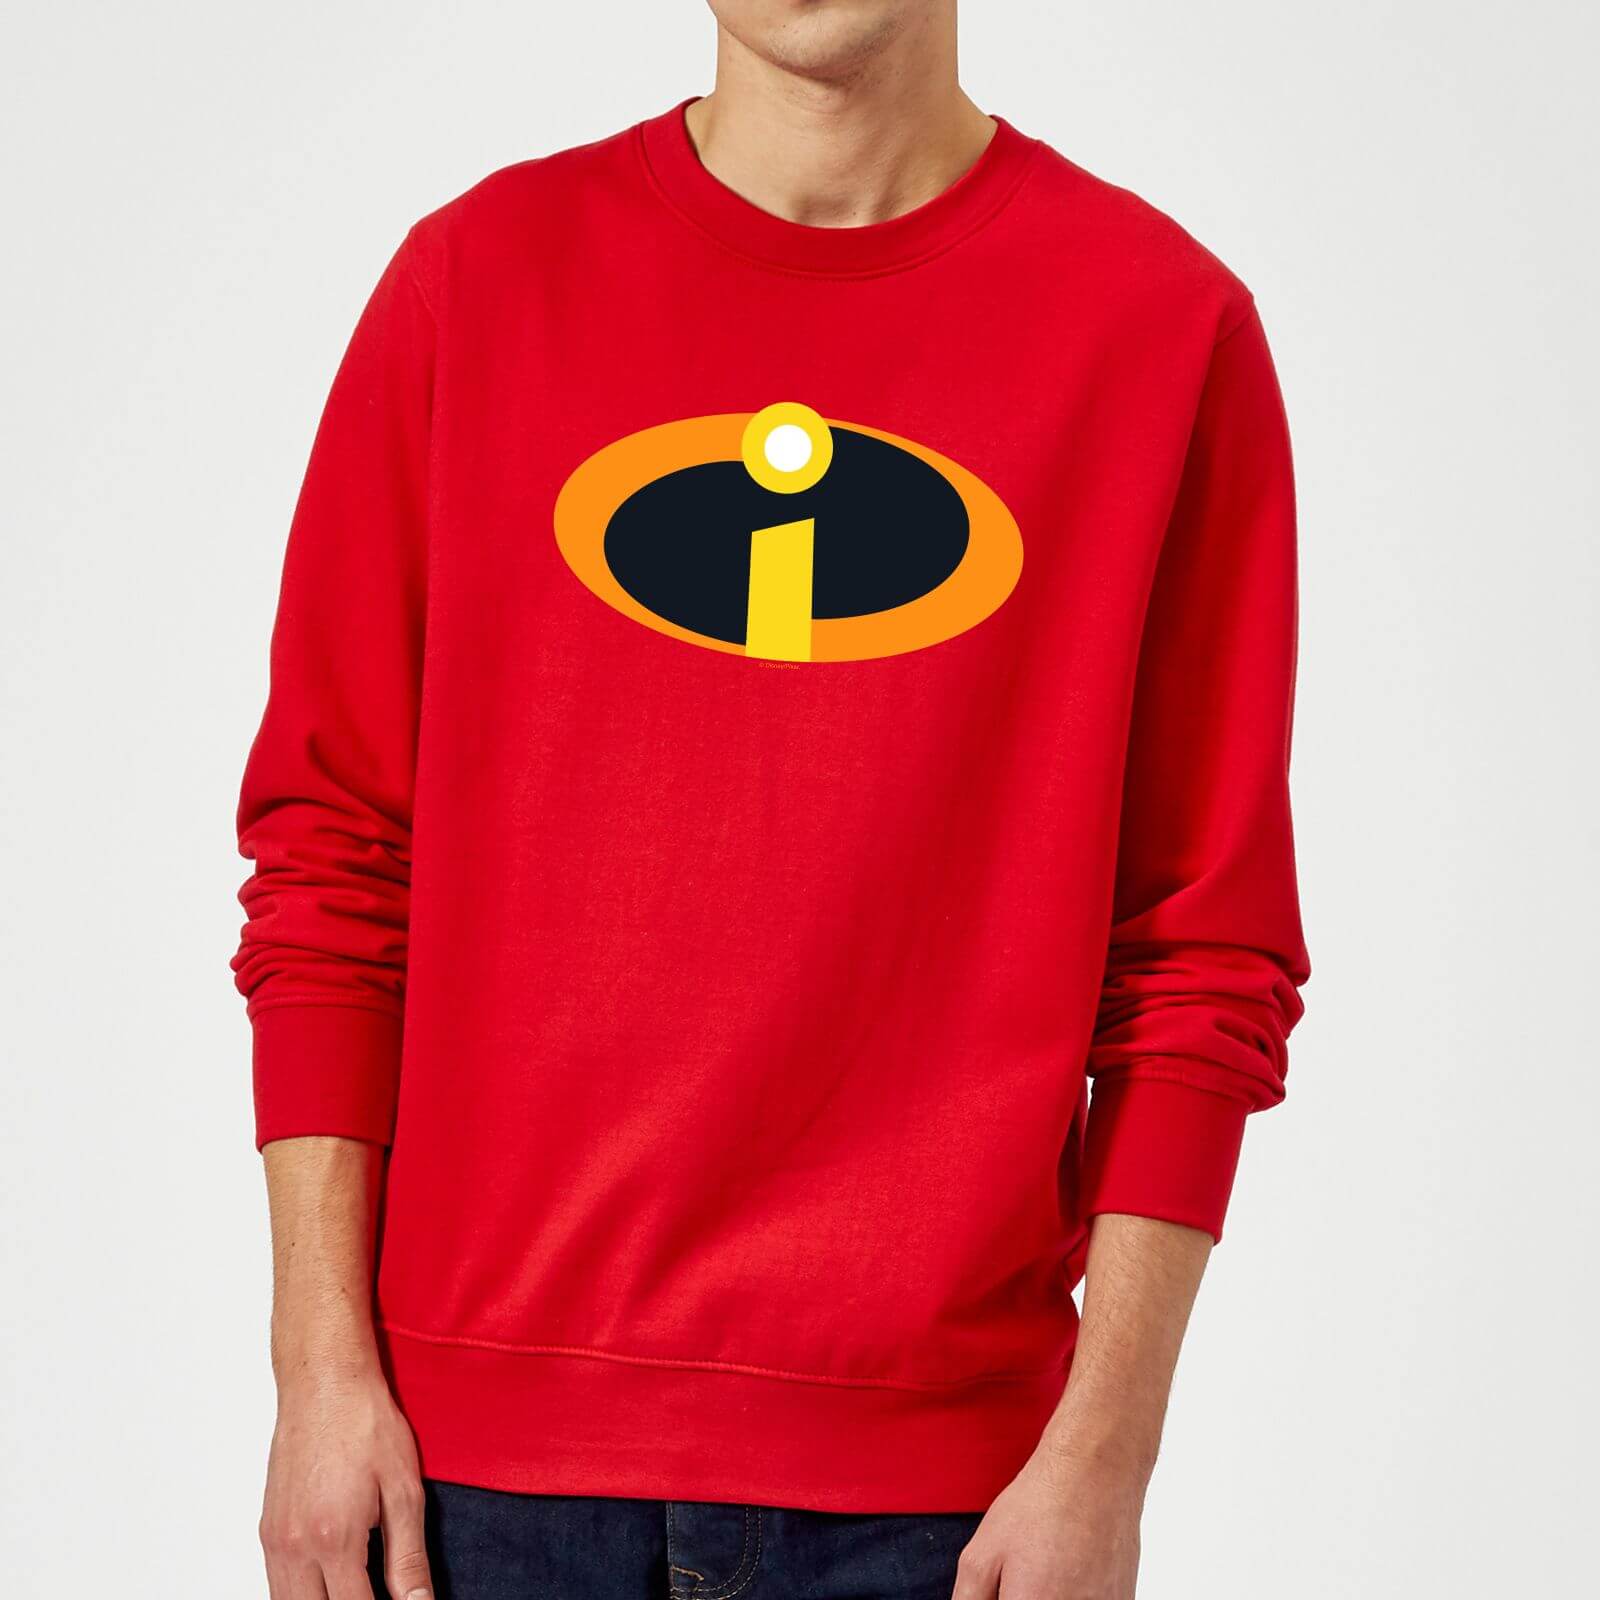 Incredibles 2 Logo Sweatshirt - Red - M